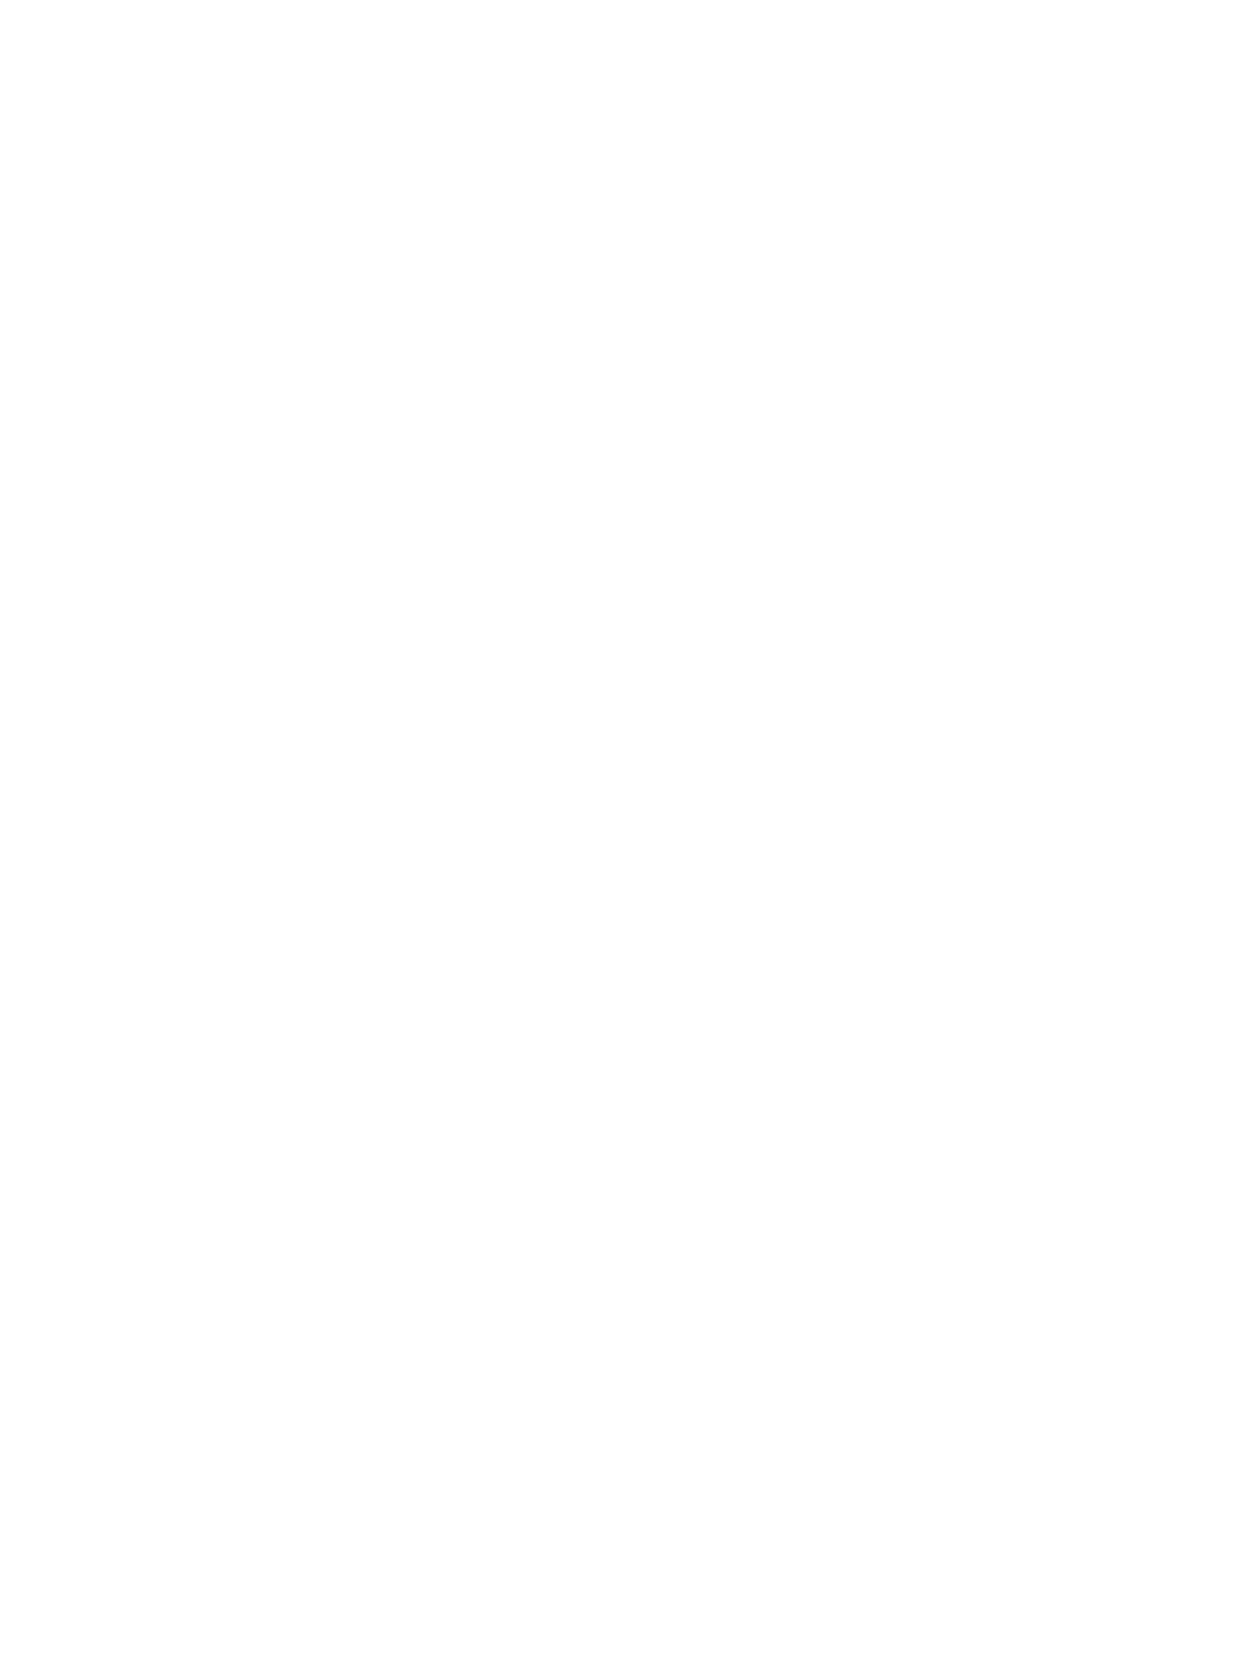 Hôtel Fleur de lys Almadies